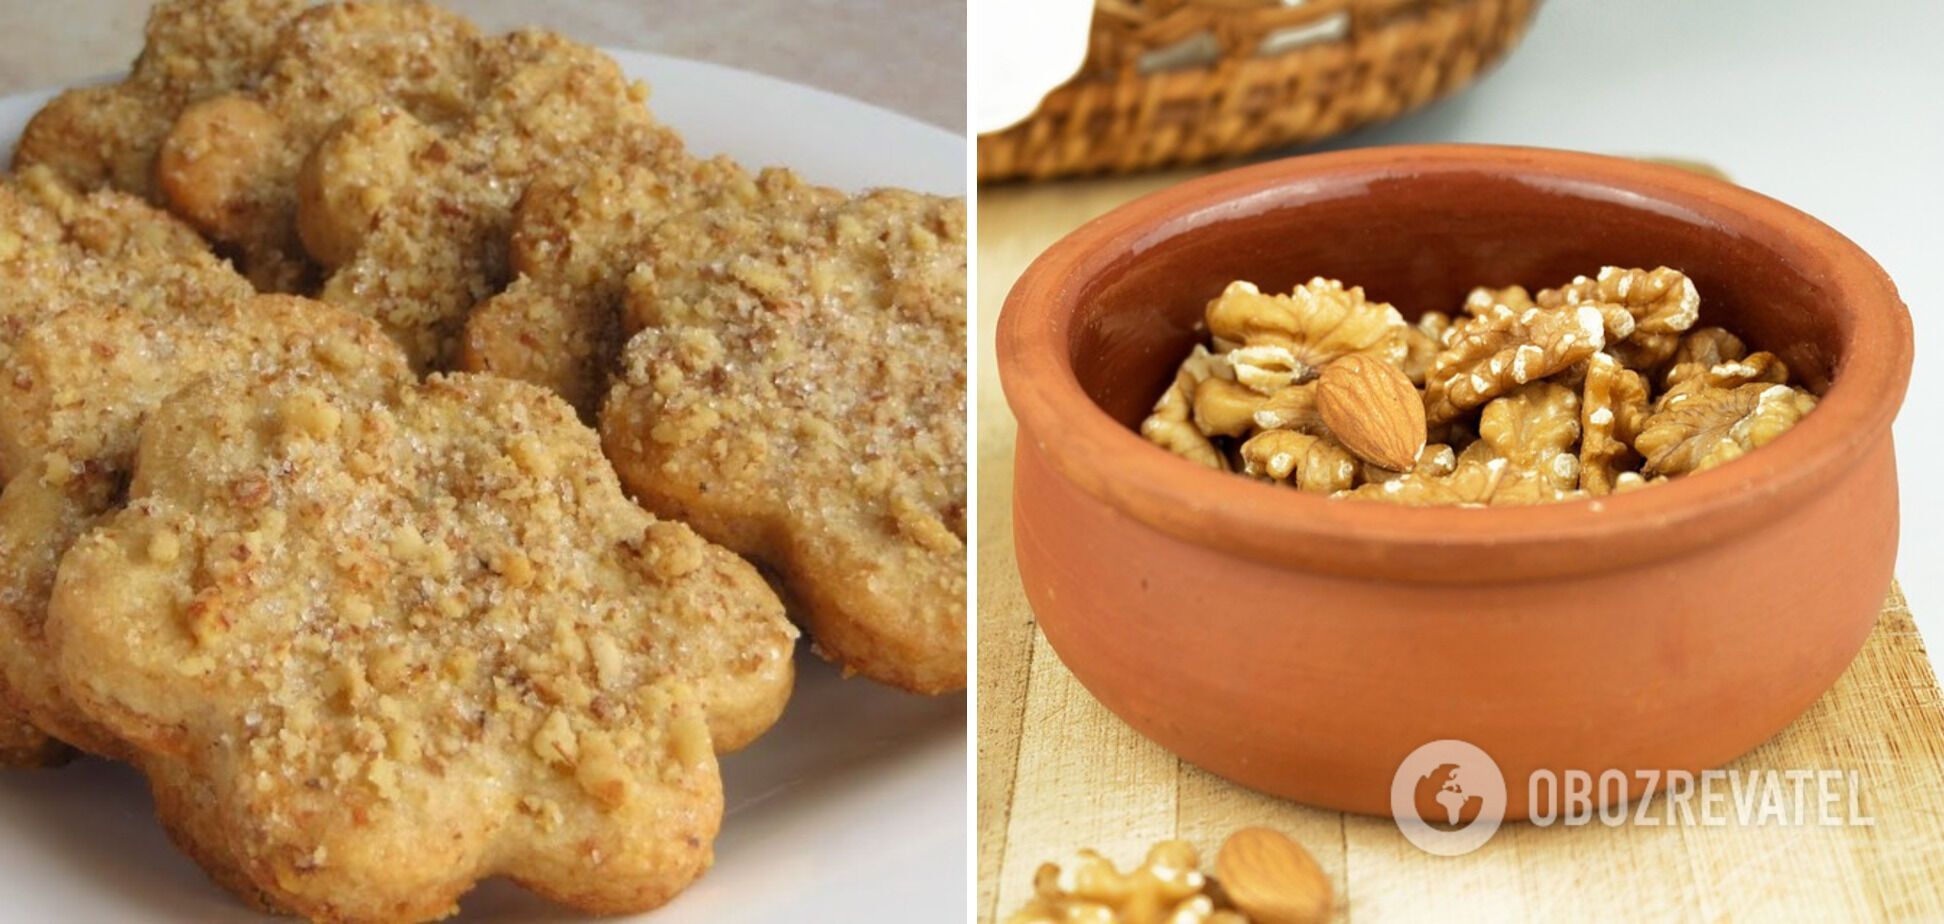 Recipe for crispy walnut cookies